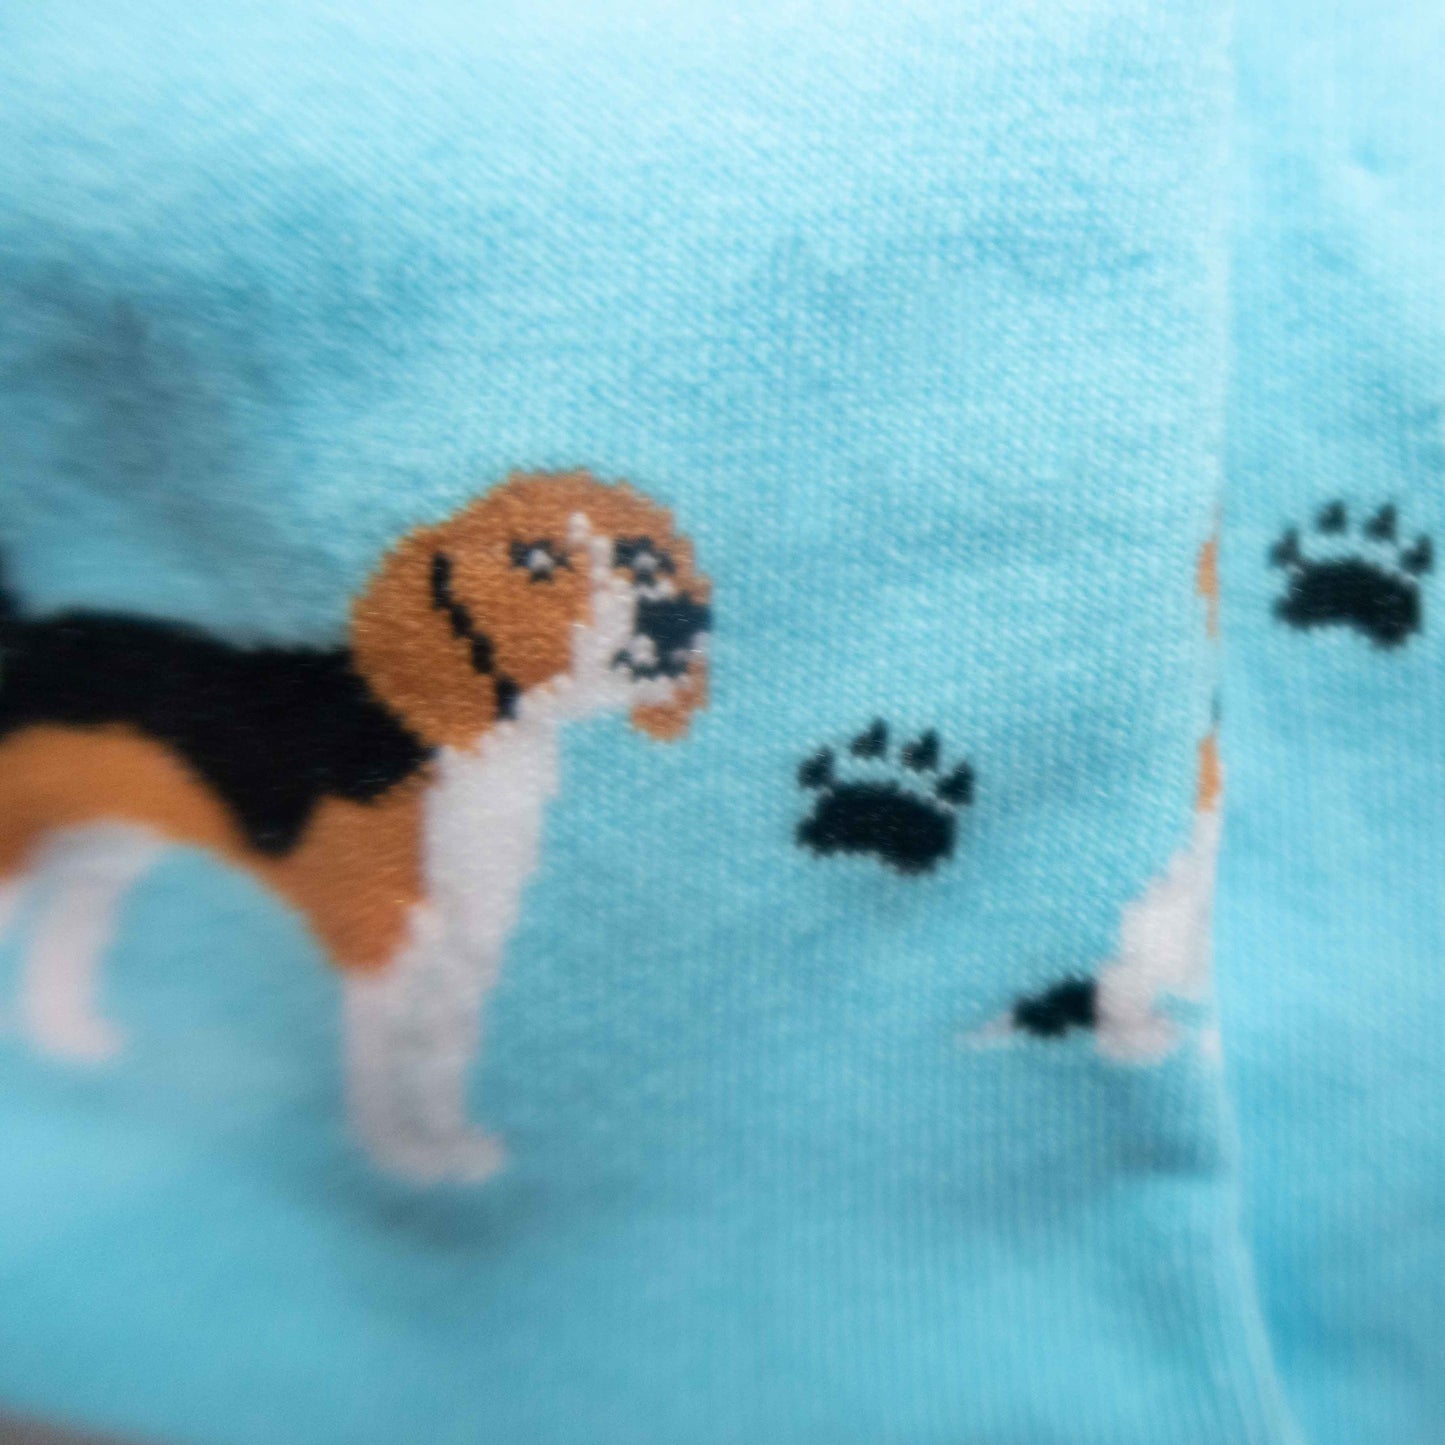 Beagle - Imagery Socks